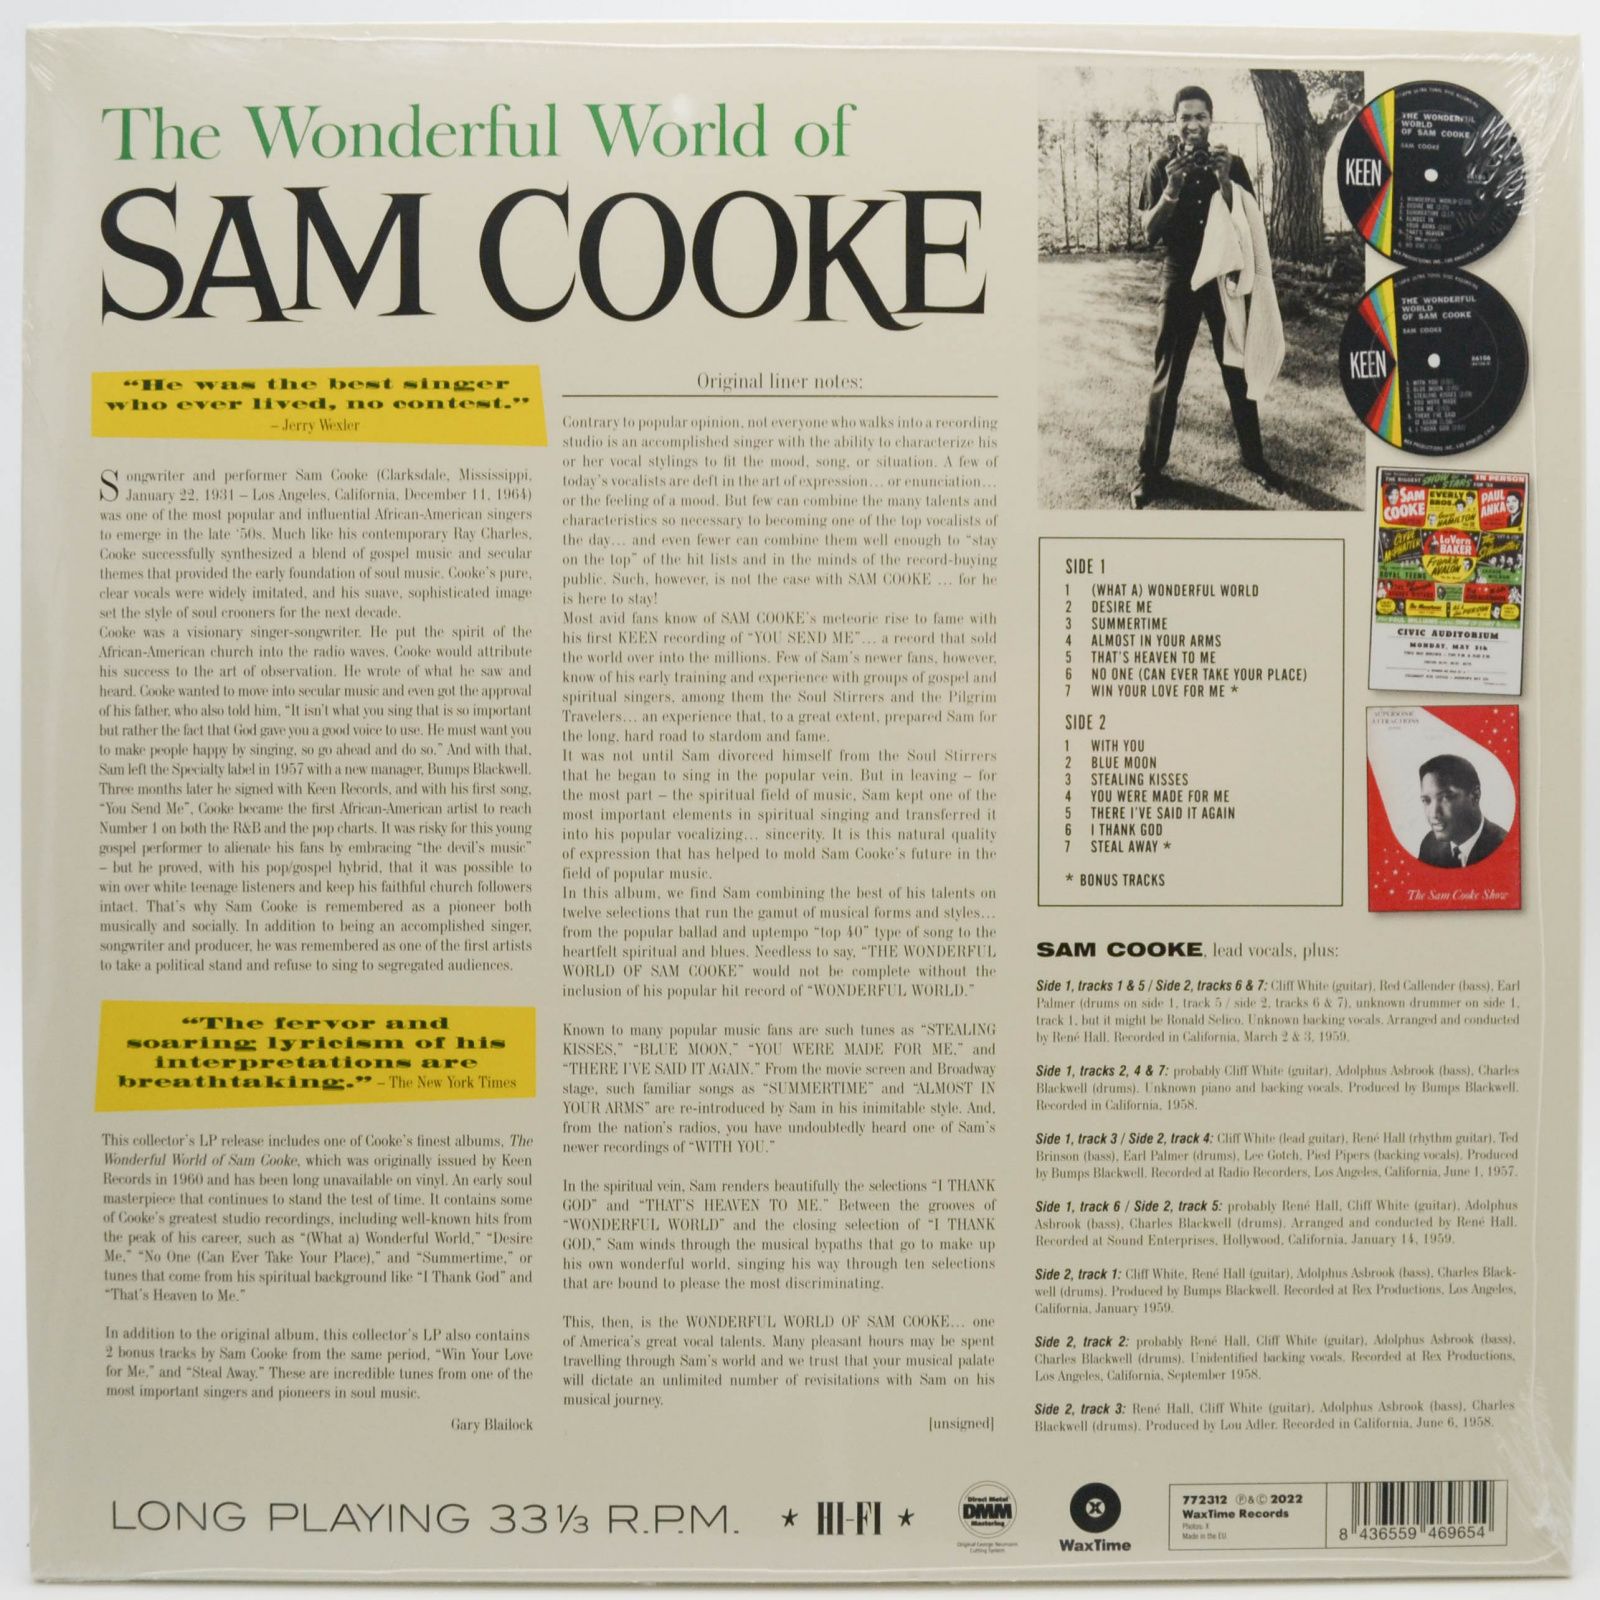 Sam Cooke — The Wonderful World Of, 1960